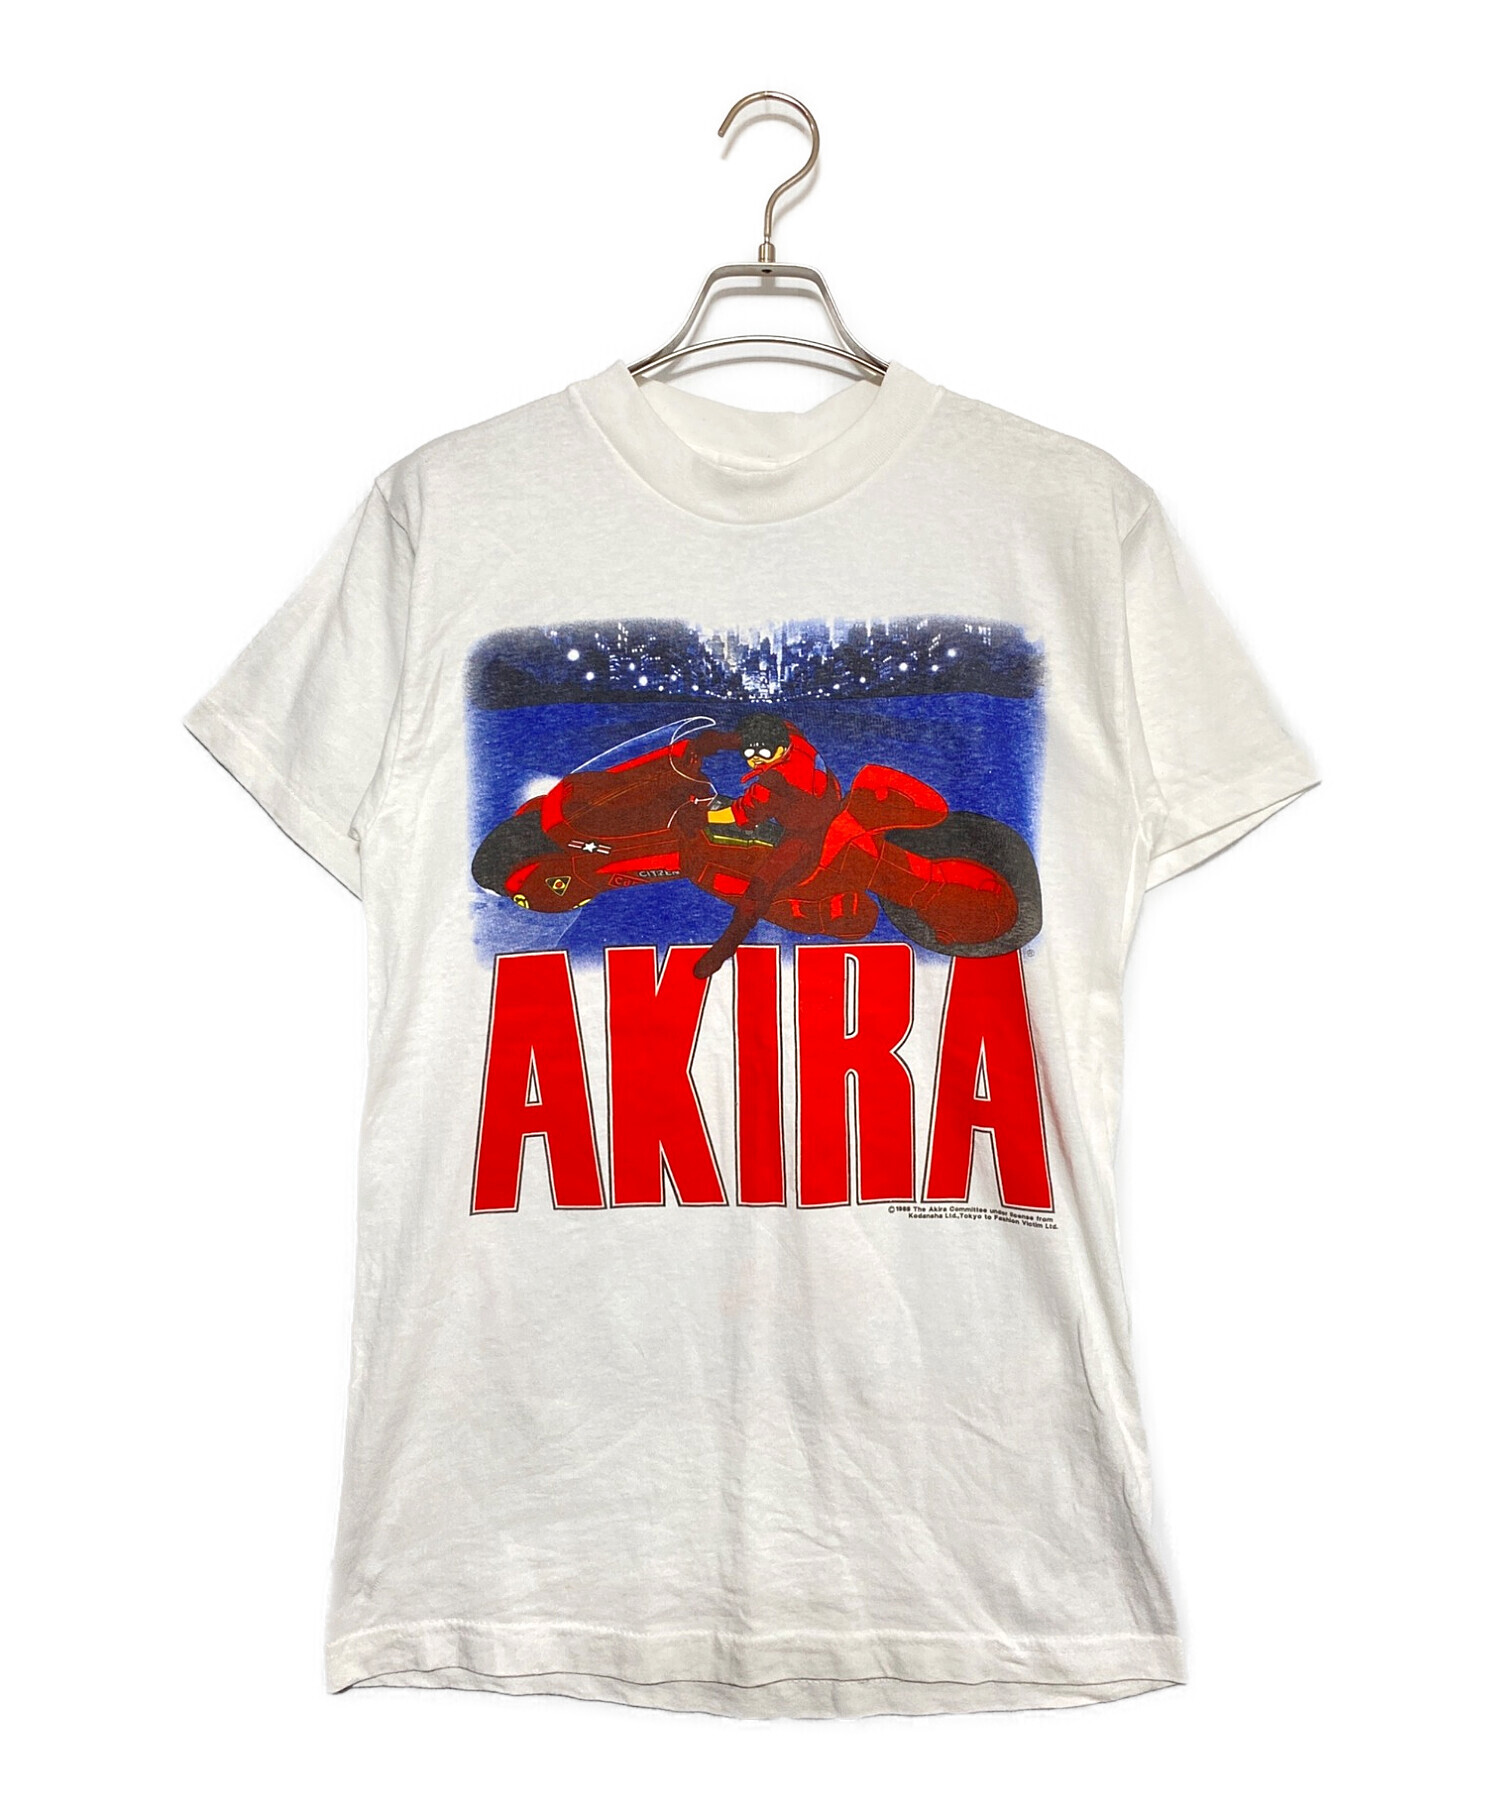 AKIRA Tシャツ